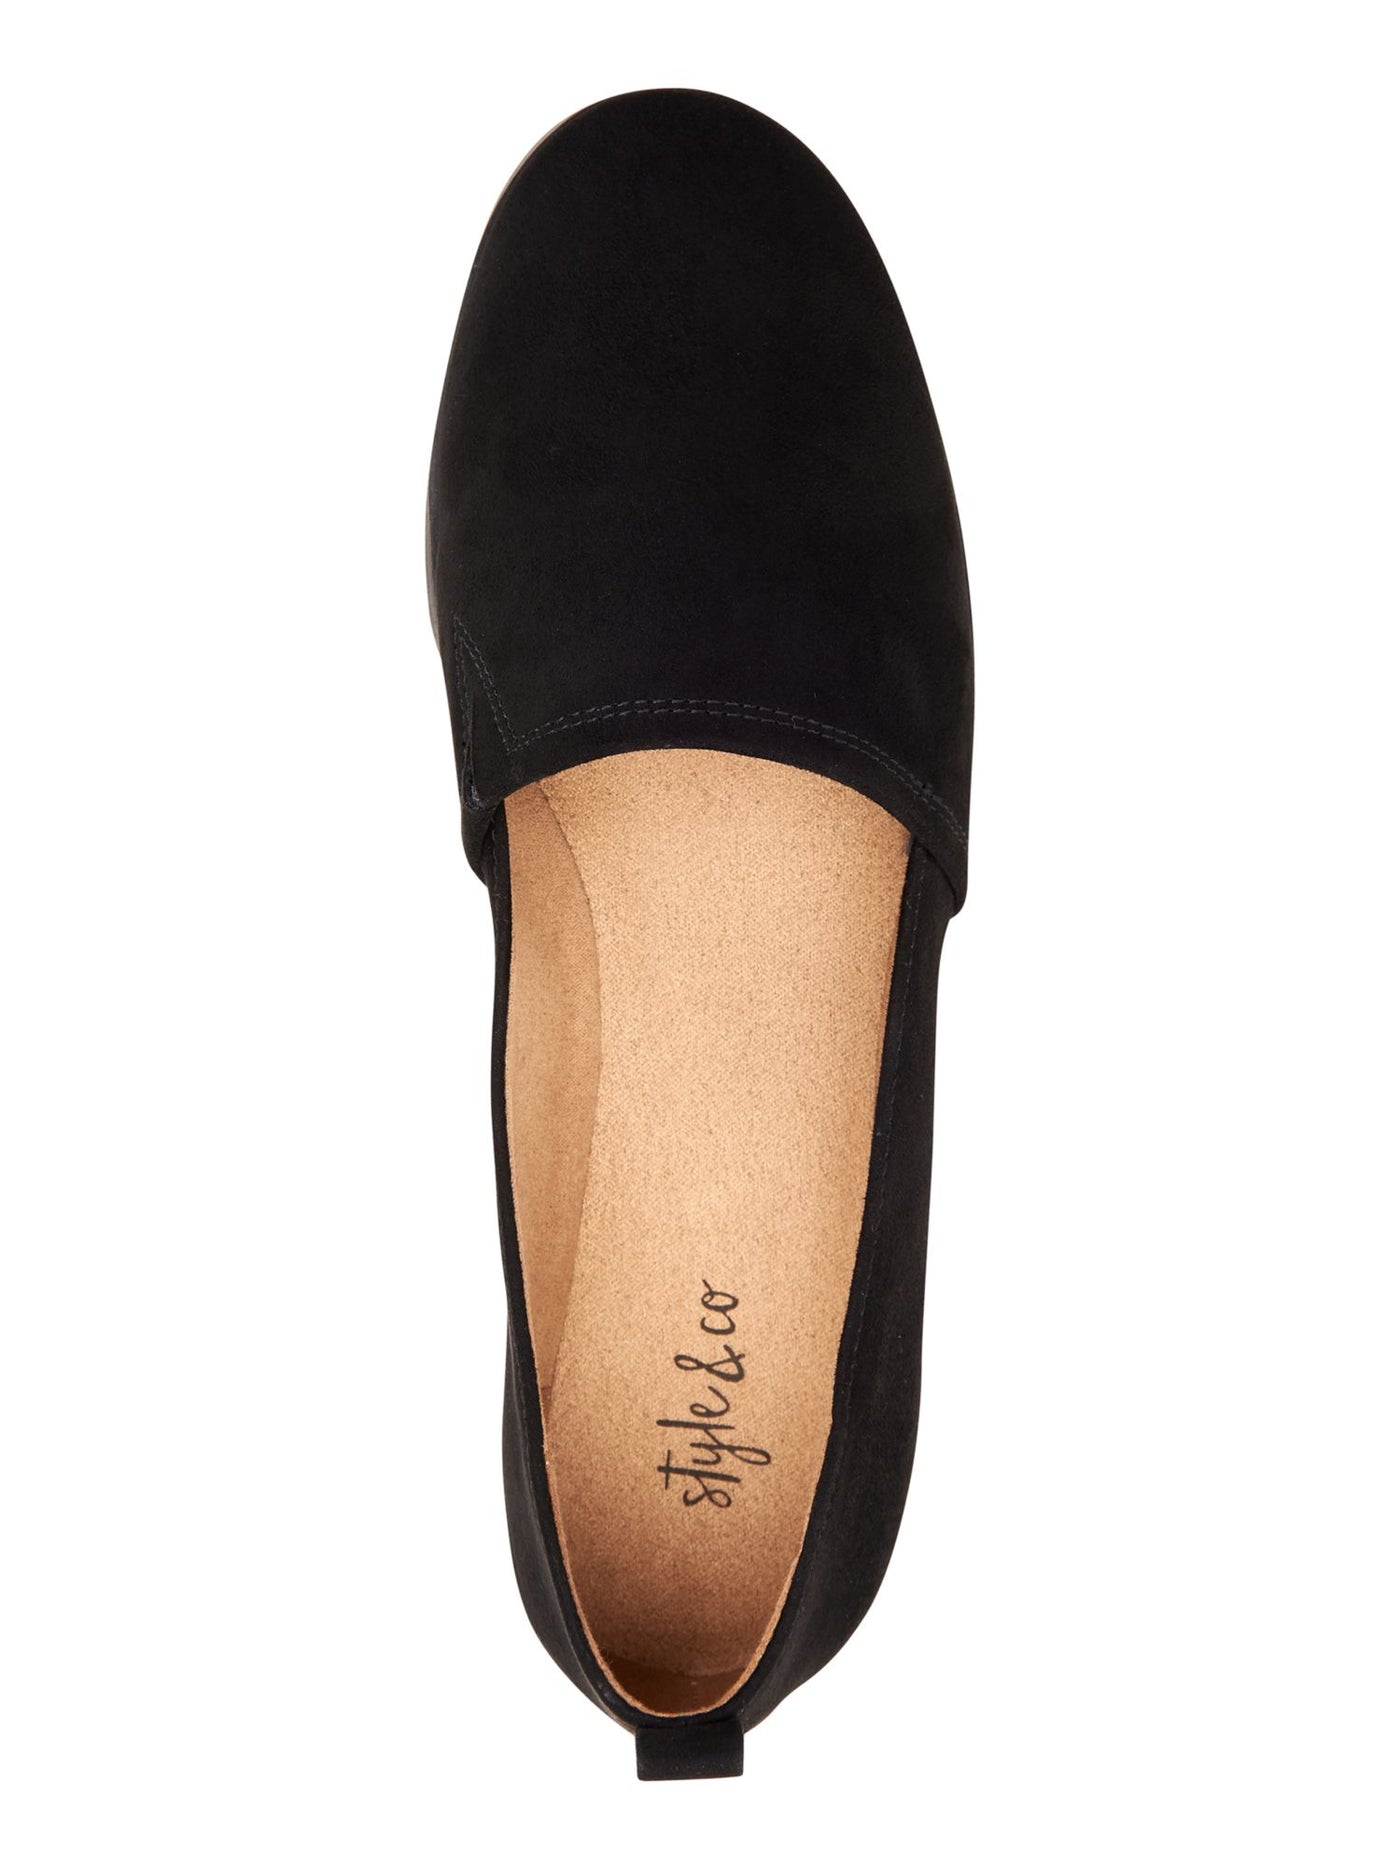 STYLE & COMPANY Womens Black Goring Padded Noura Round Toe Slip On Flats Shoes 10 M